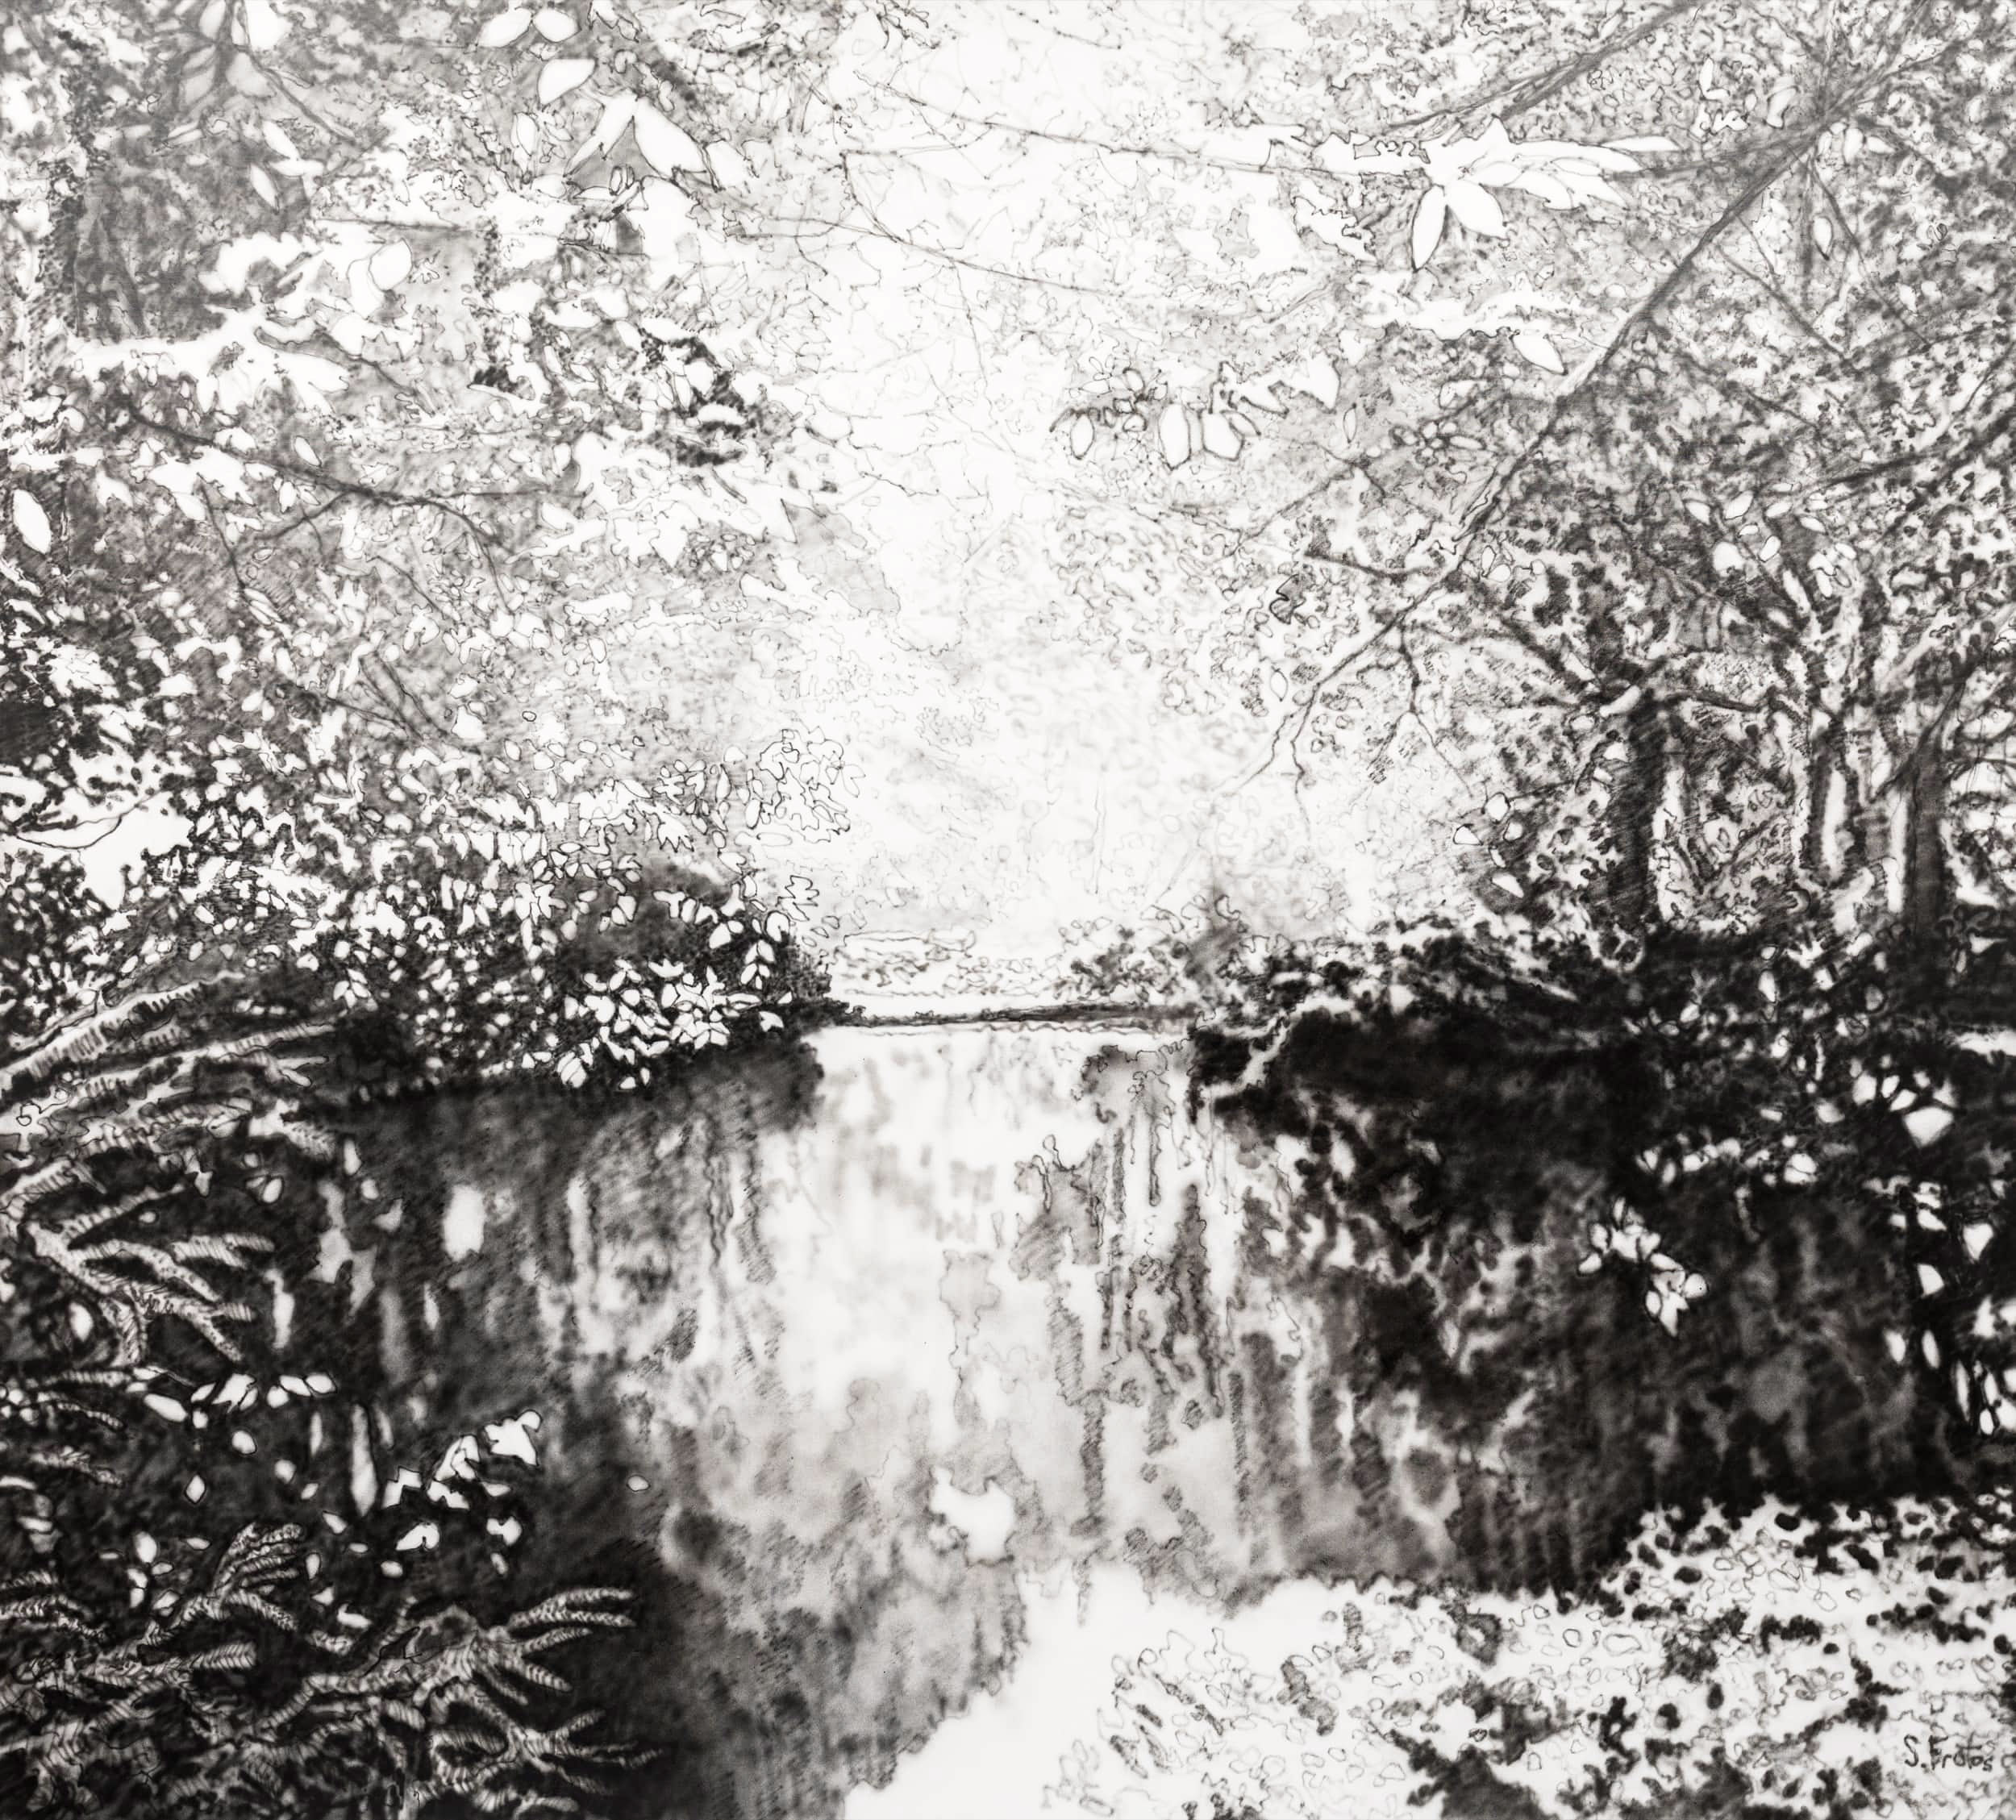 Tiergarten. Oil on canvas, 200 x 180 cm, 2022